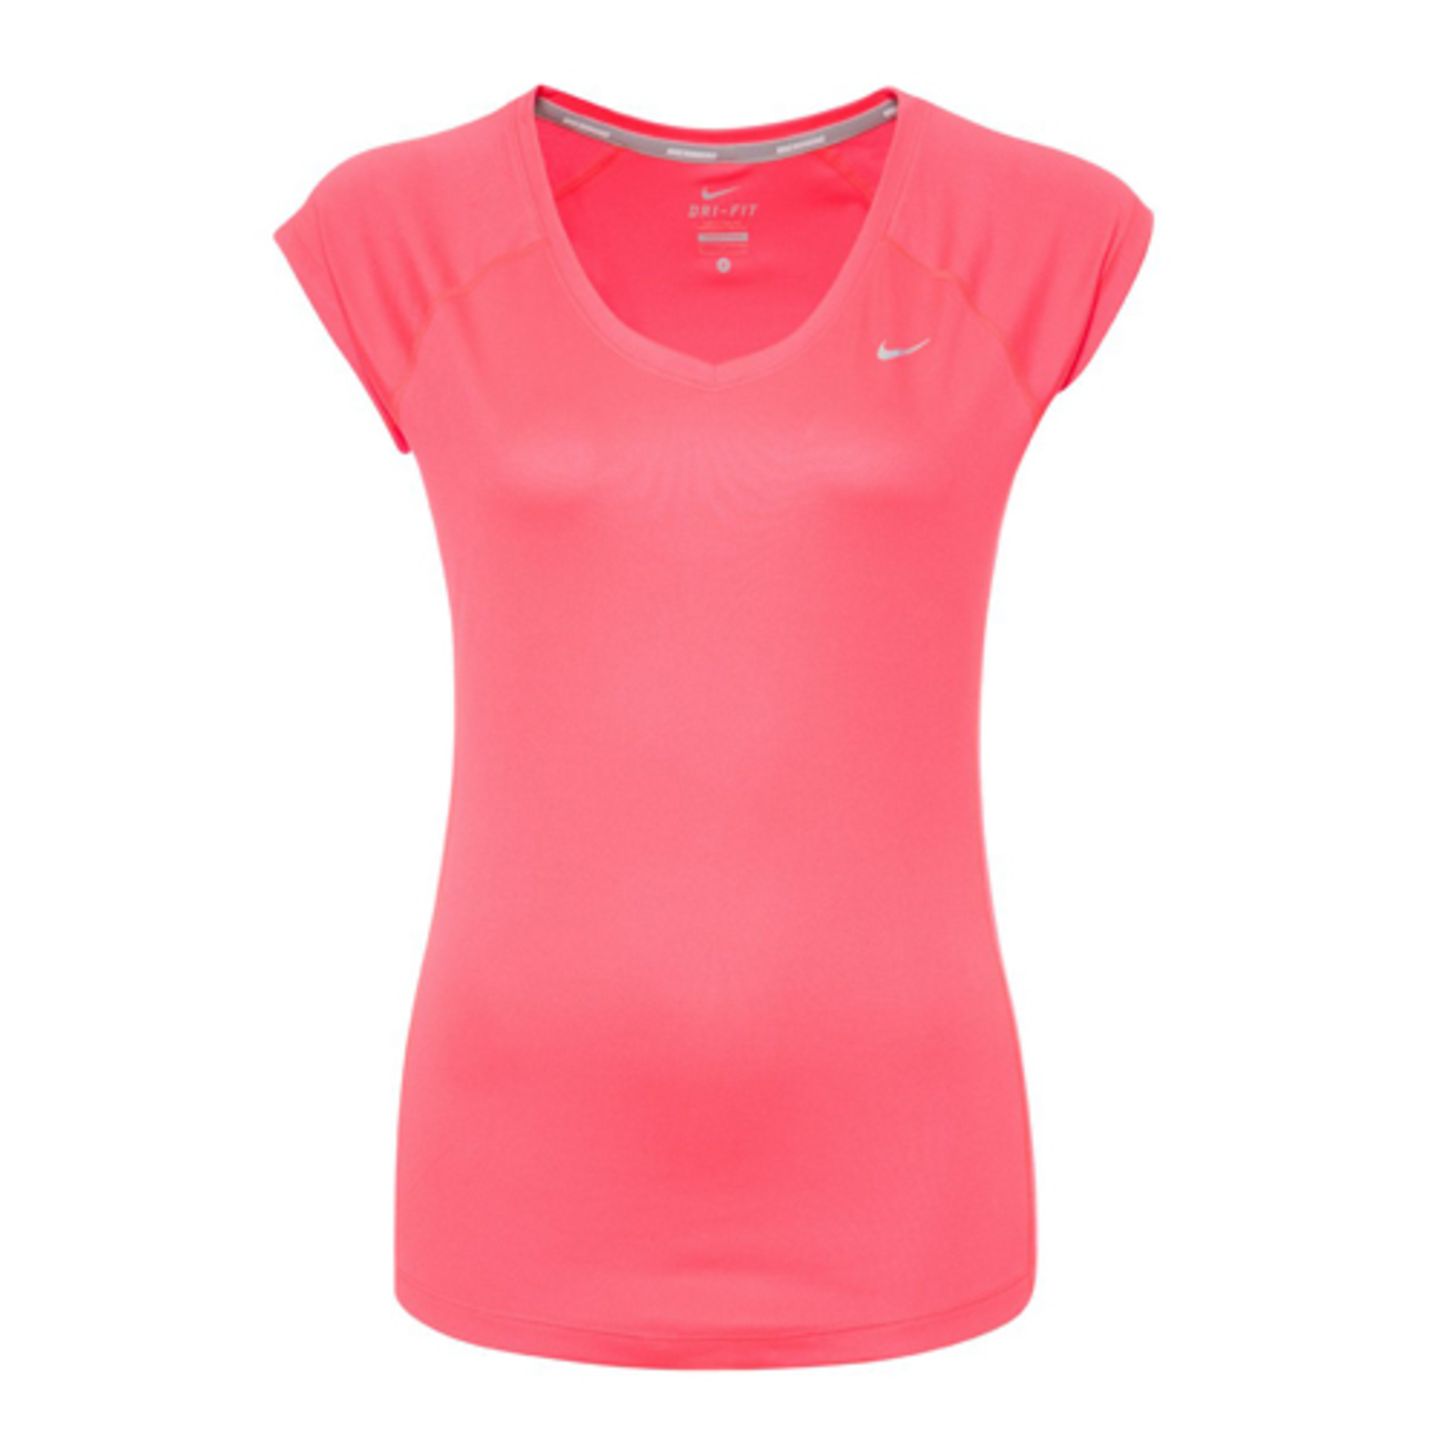 Sporttop Nike pink